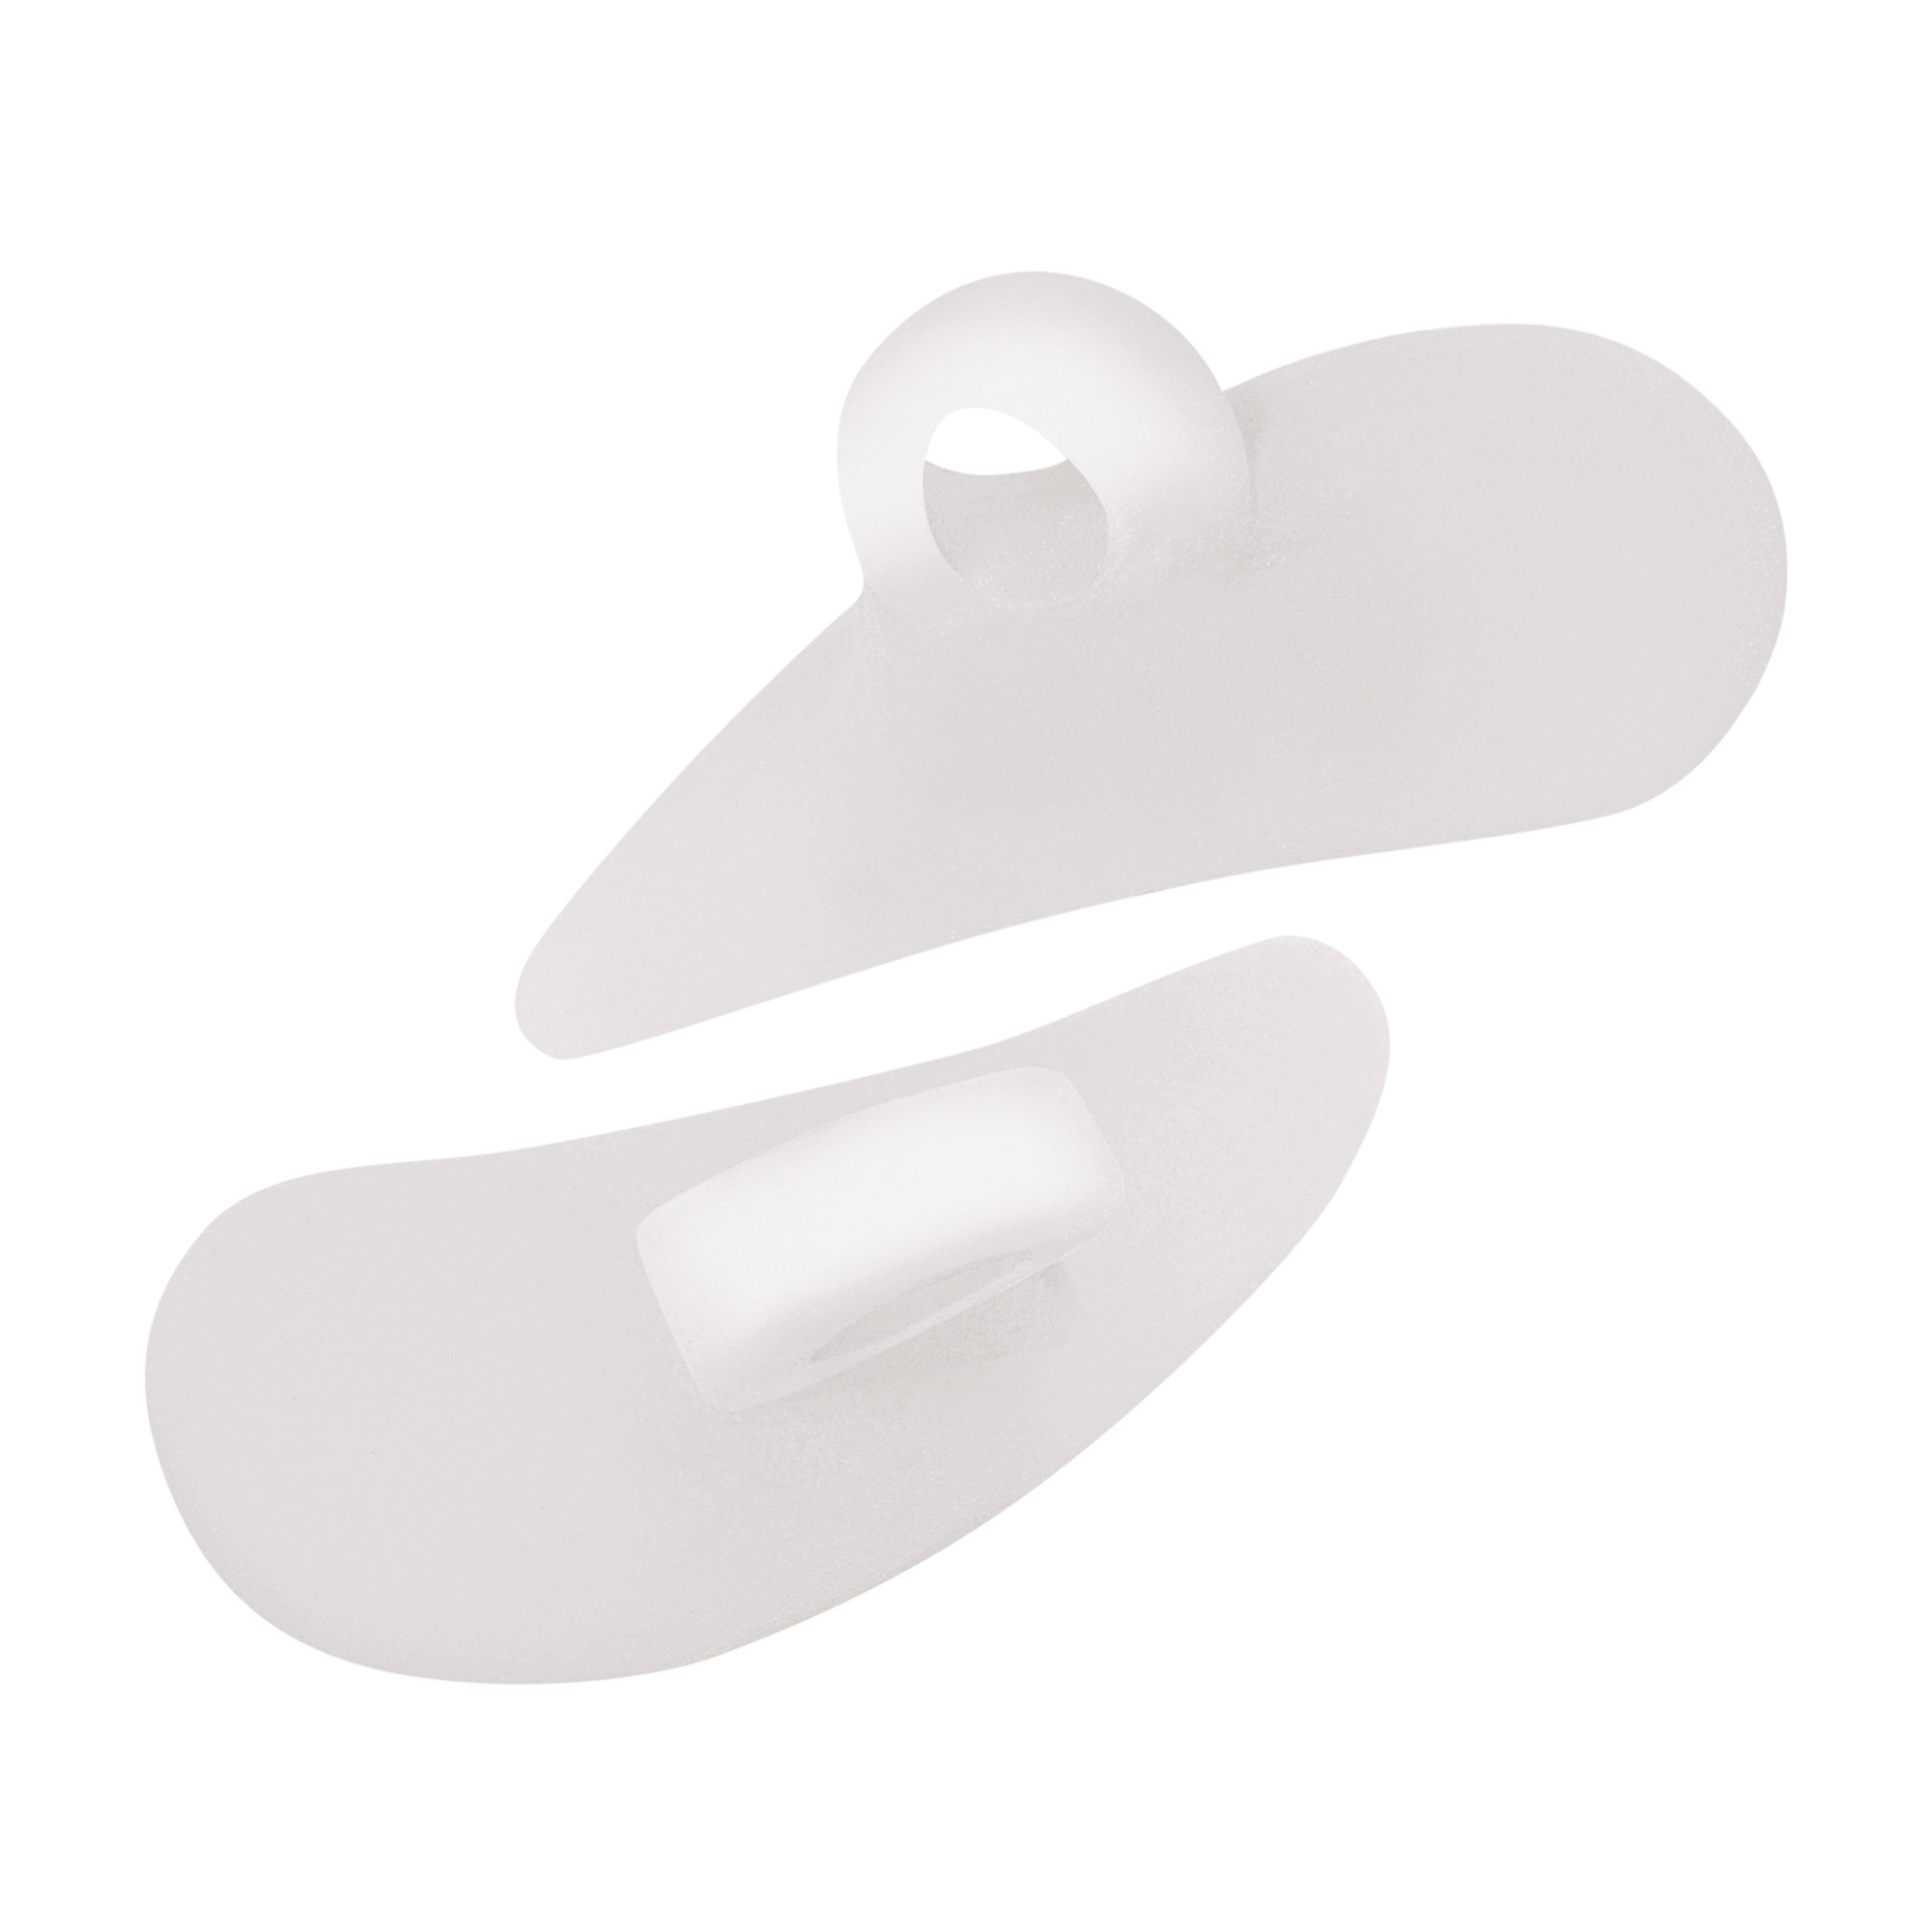 Bio-Gel hammer toe cushion made of transparent Tecniwork® Polymer Gel